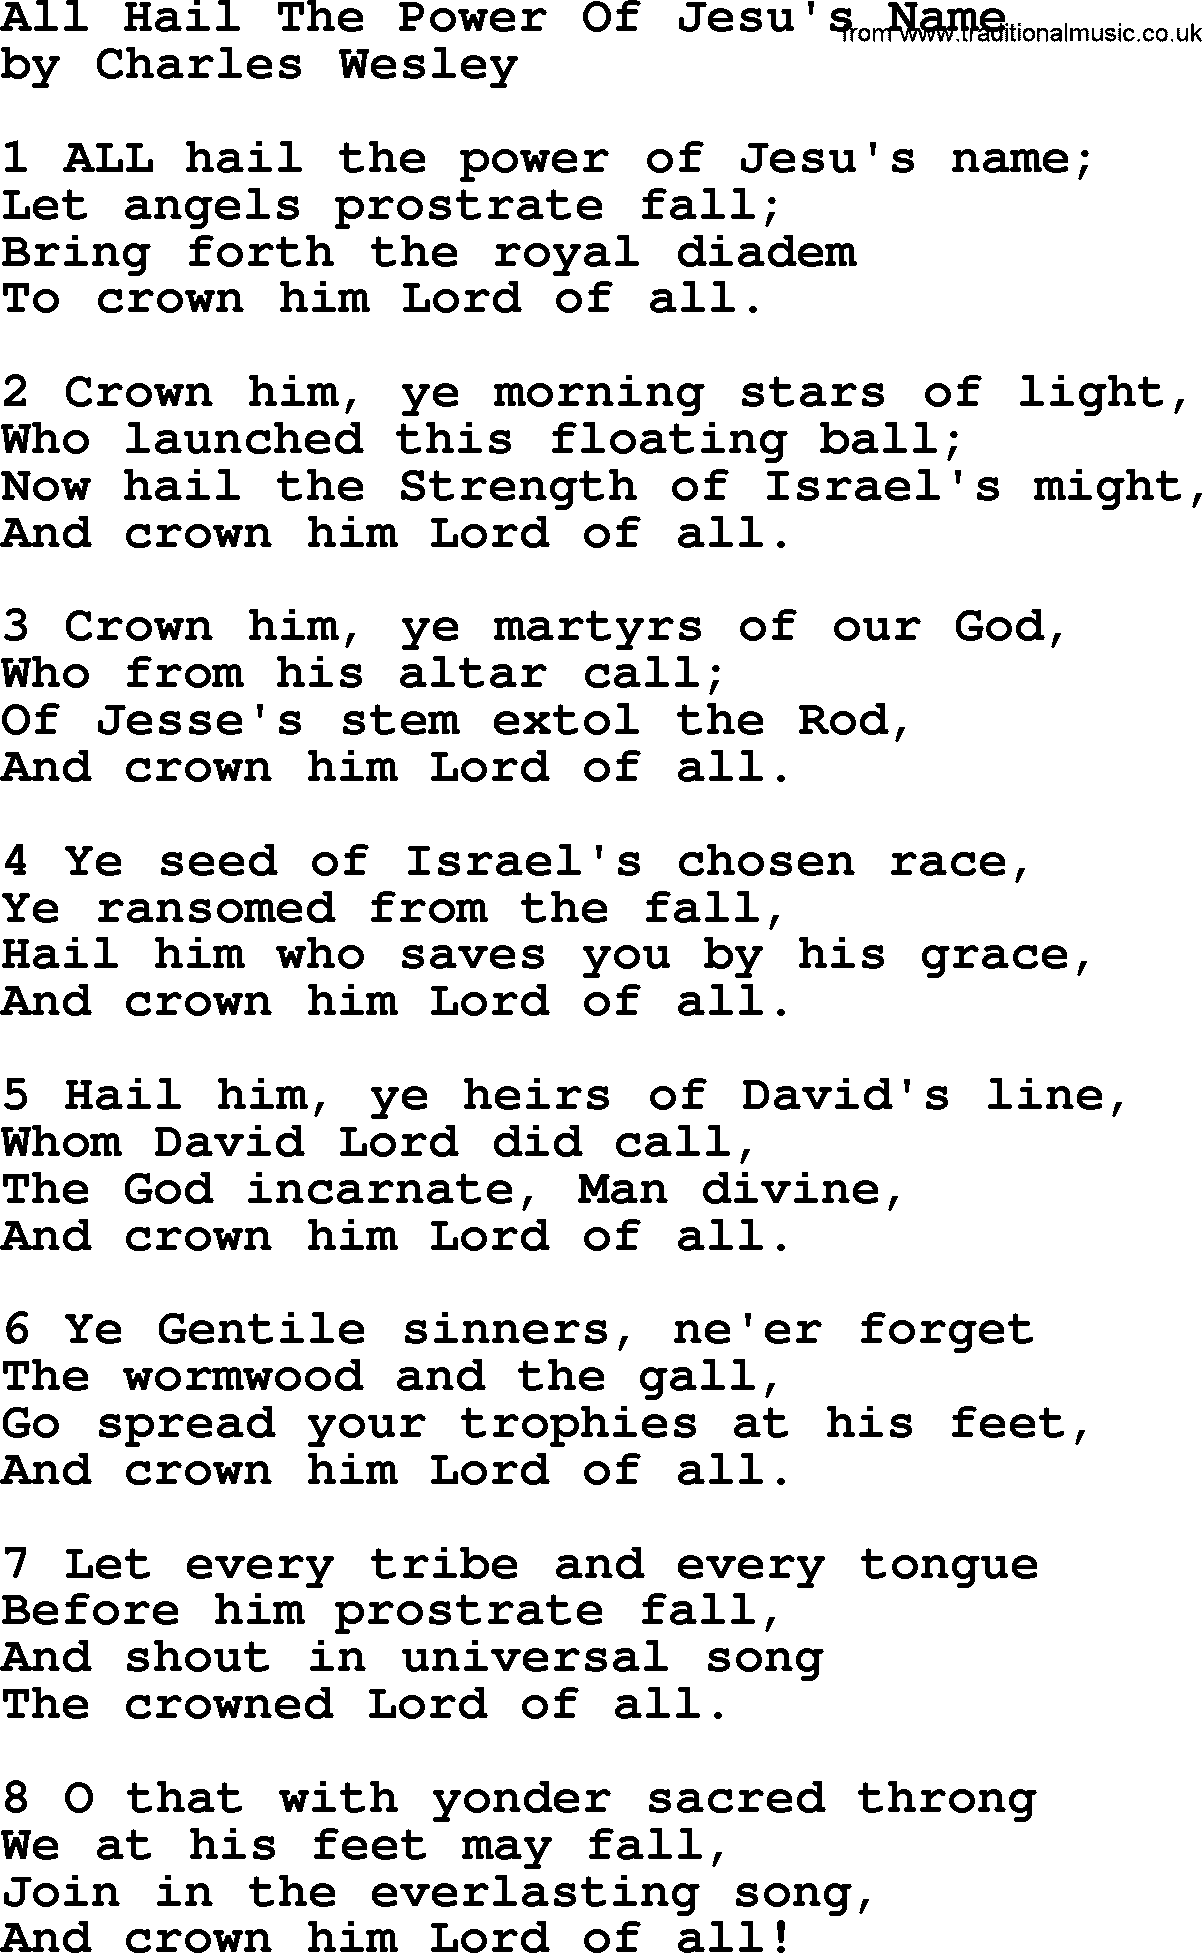 Charles Wesley hymn: All Hail The Power Of Jesu's Name, lyrics